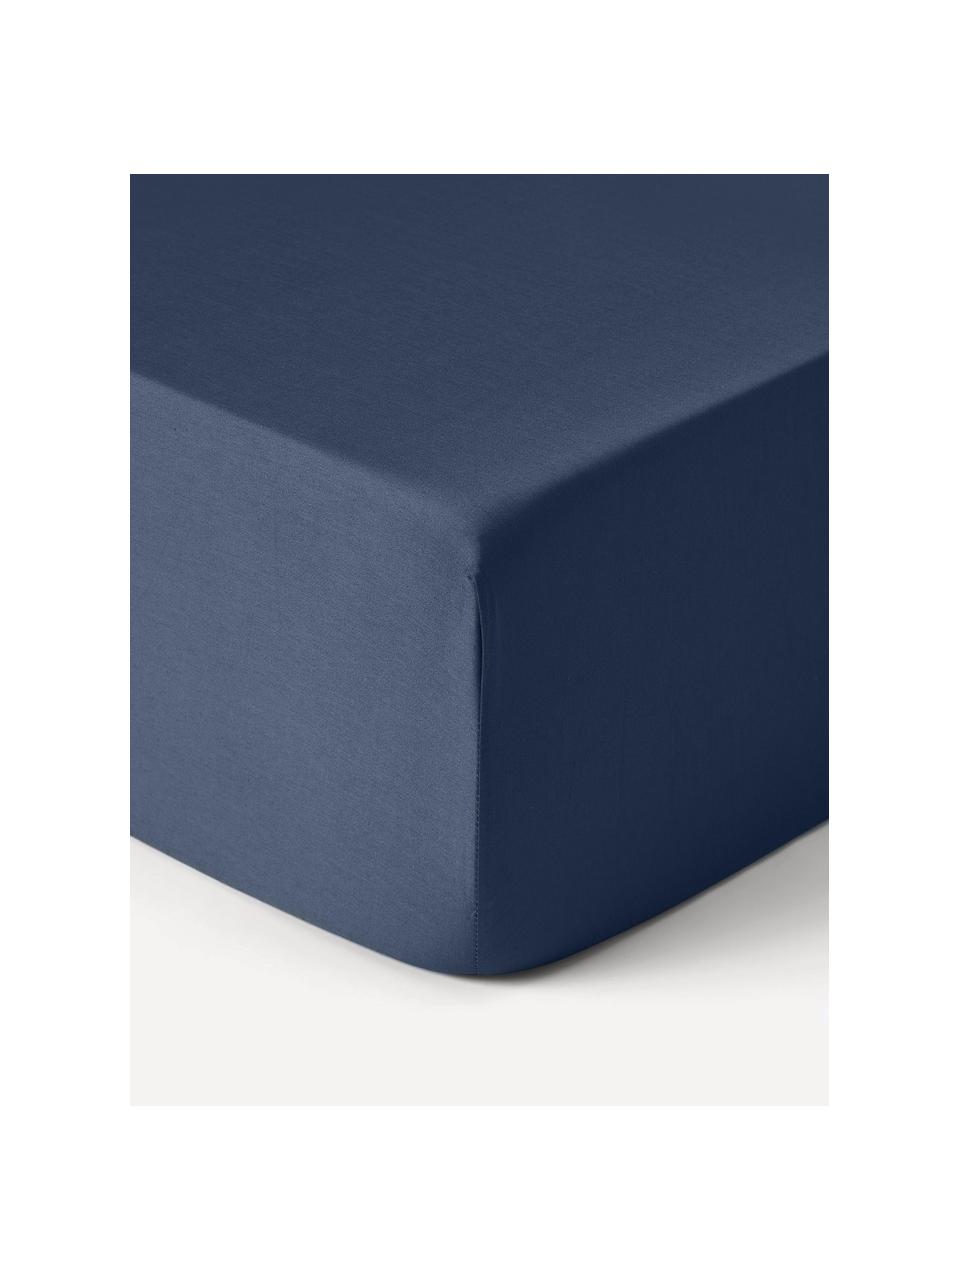 Sábana bajera de satén Comfort, Azul oscuro, Cama 90 cm (90 x 200 x 25 cm)